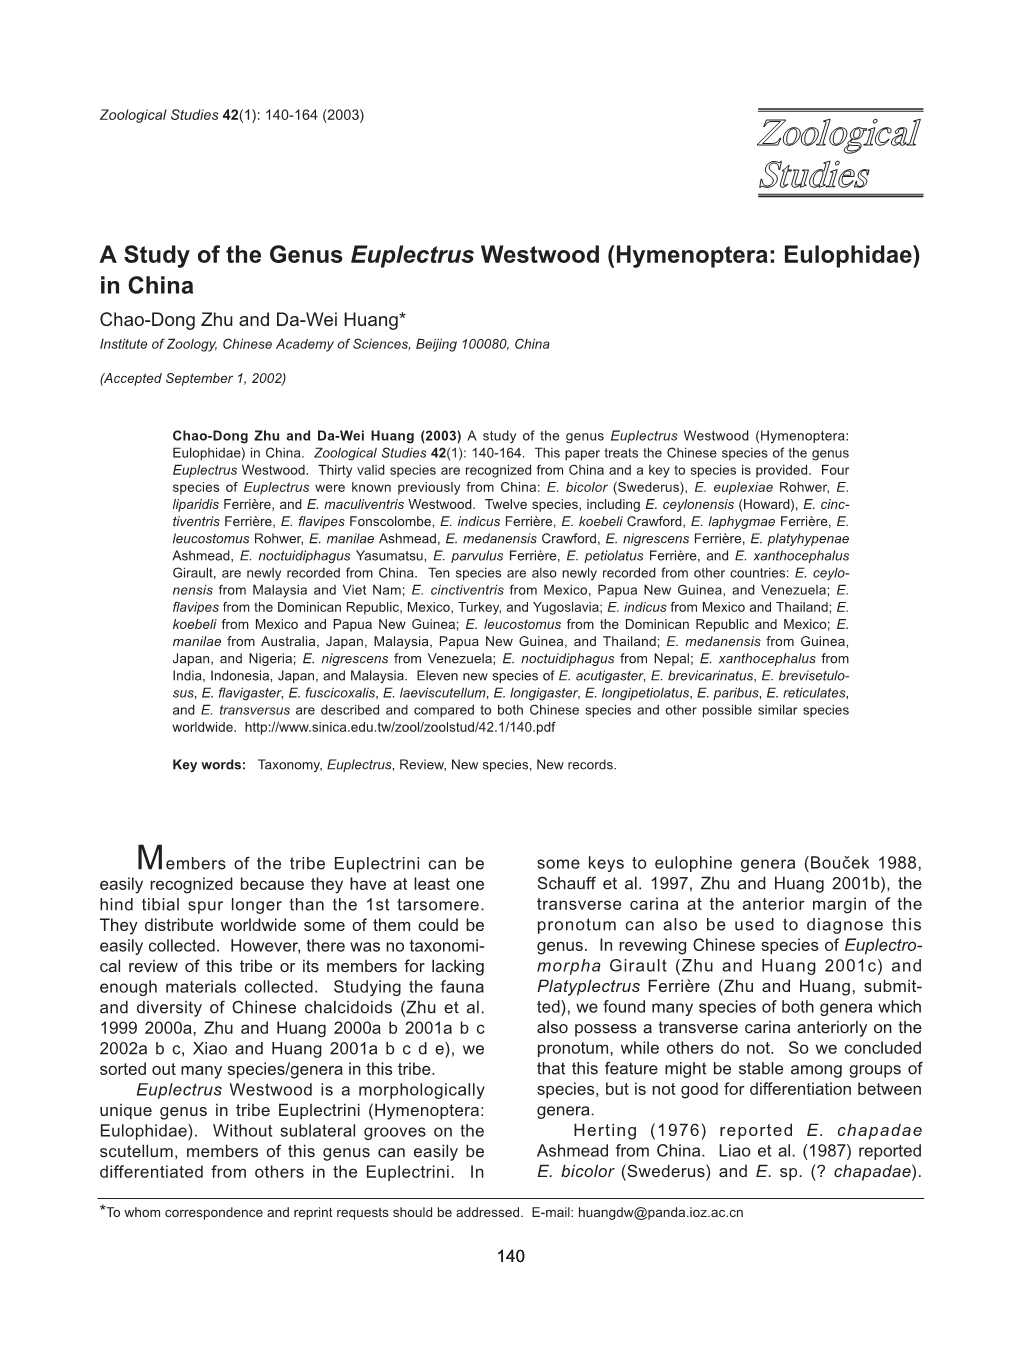 A Study of the Genus Euplectrus Westwood